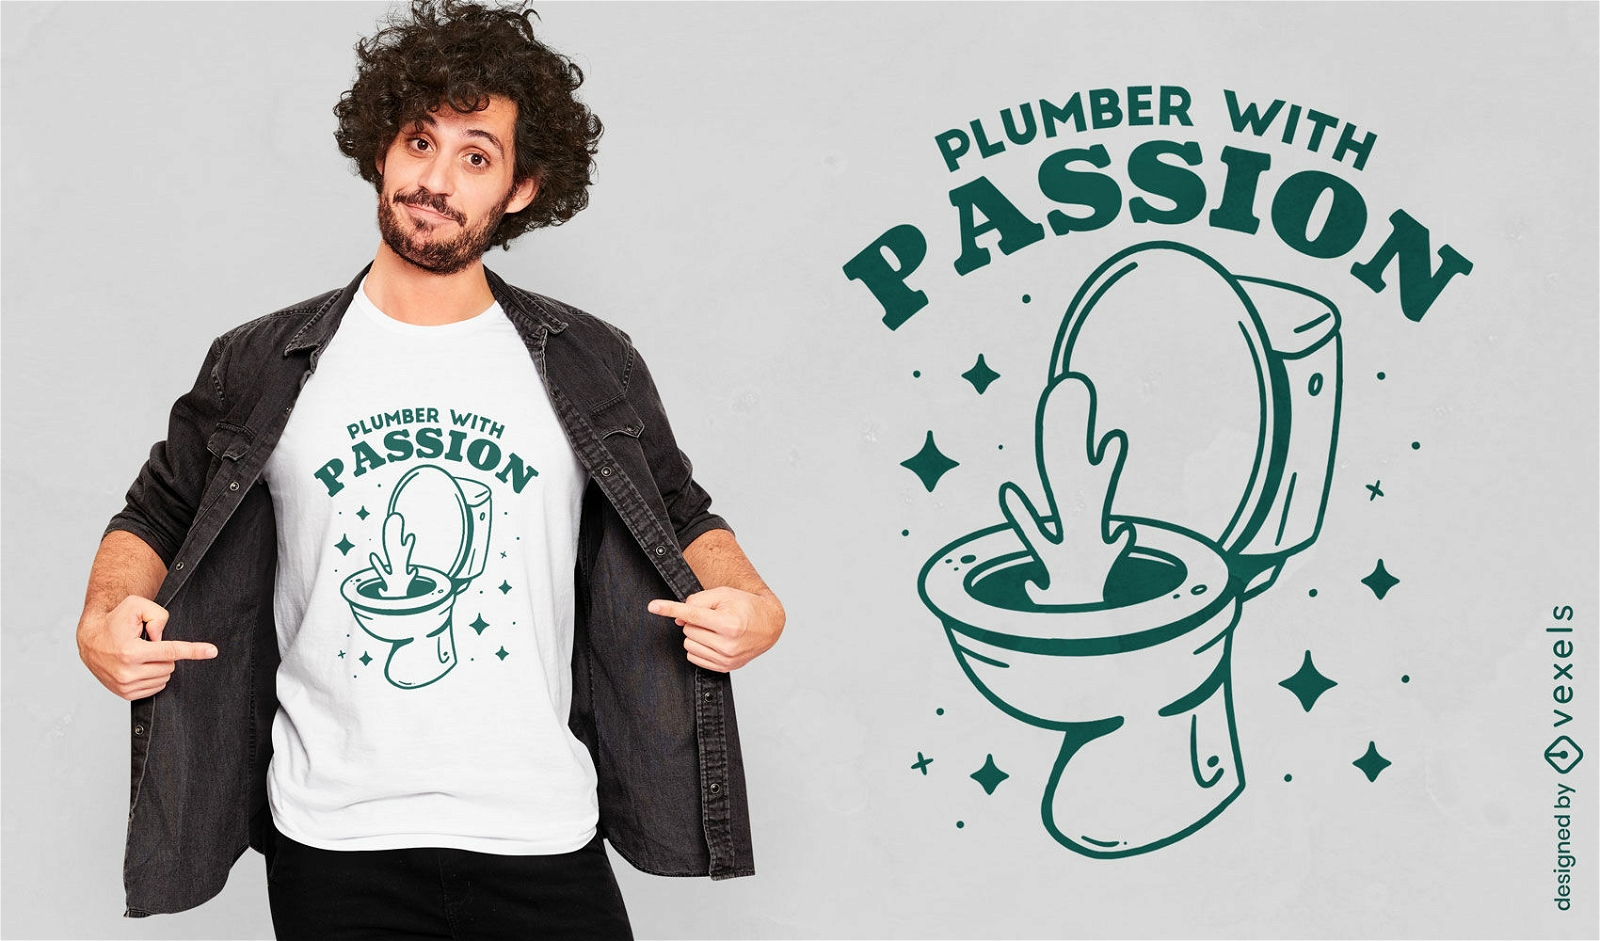 Plumber toilet quote t-shirt design